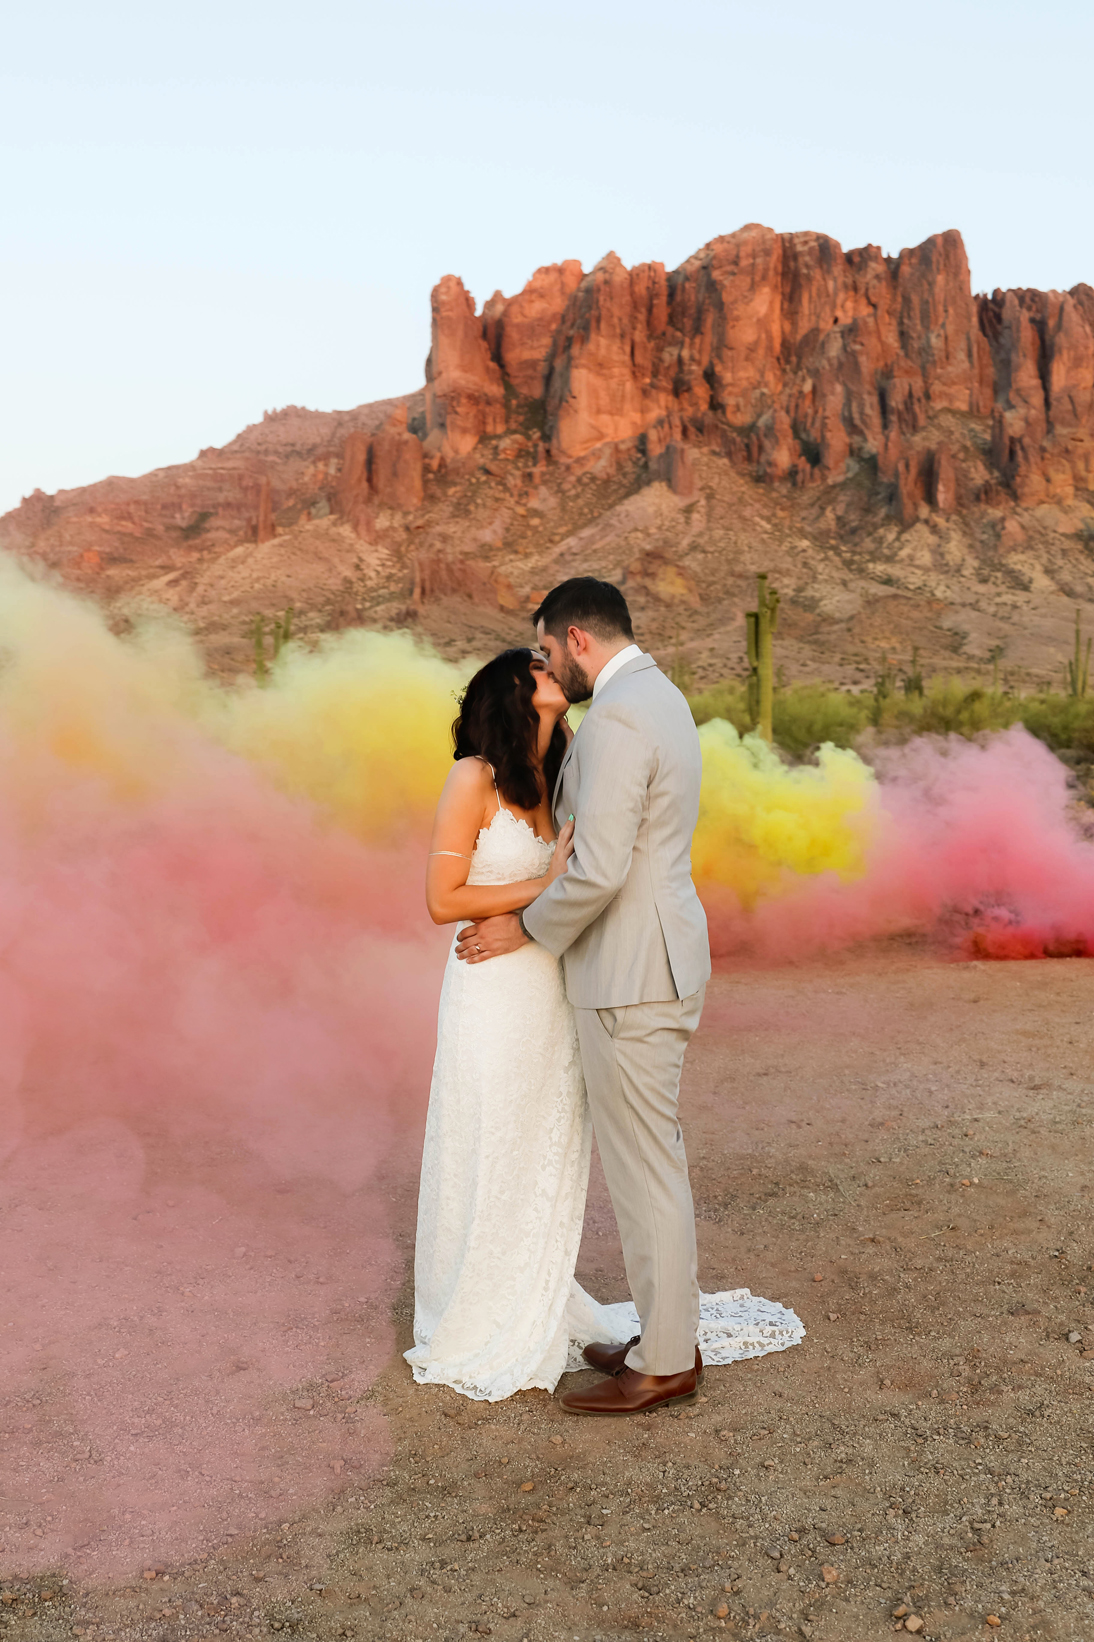 Bohemian Bride and Groom against Colorful Smoke.jpg